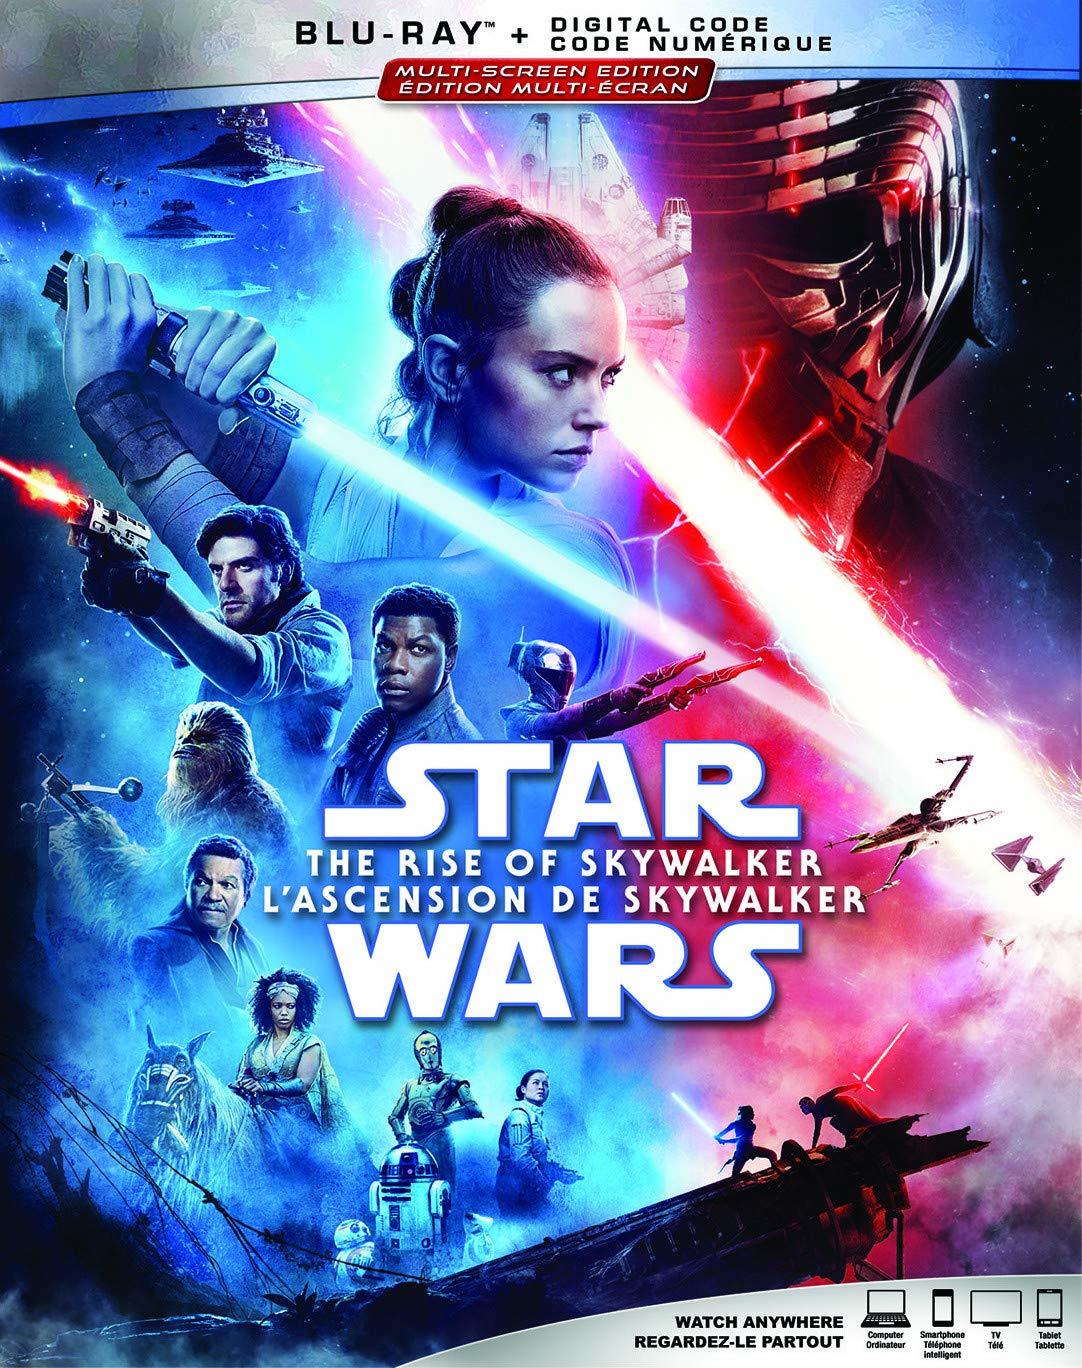 wars - Star Wars: Episode IX - The Rise of Skywalker (2019) Star Wars: El Ascenso de Skywalker (2019) [AC3 5.1 + SUP] [Blu Ray-Rip] 259412_front